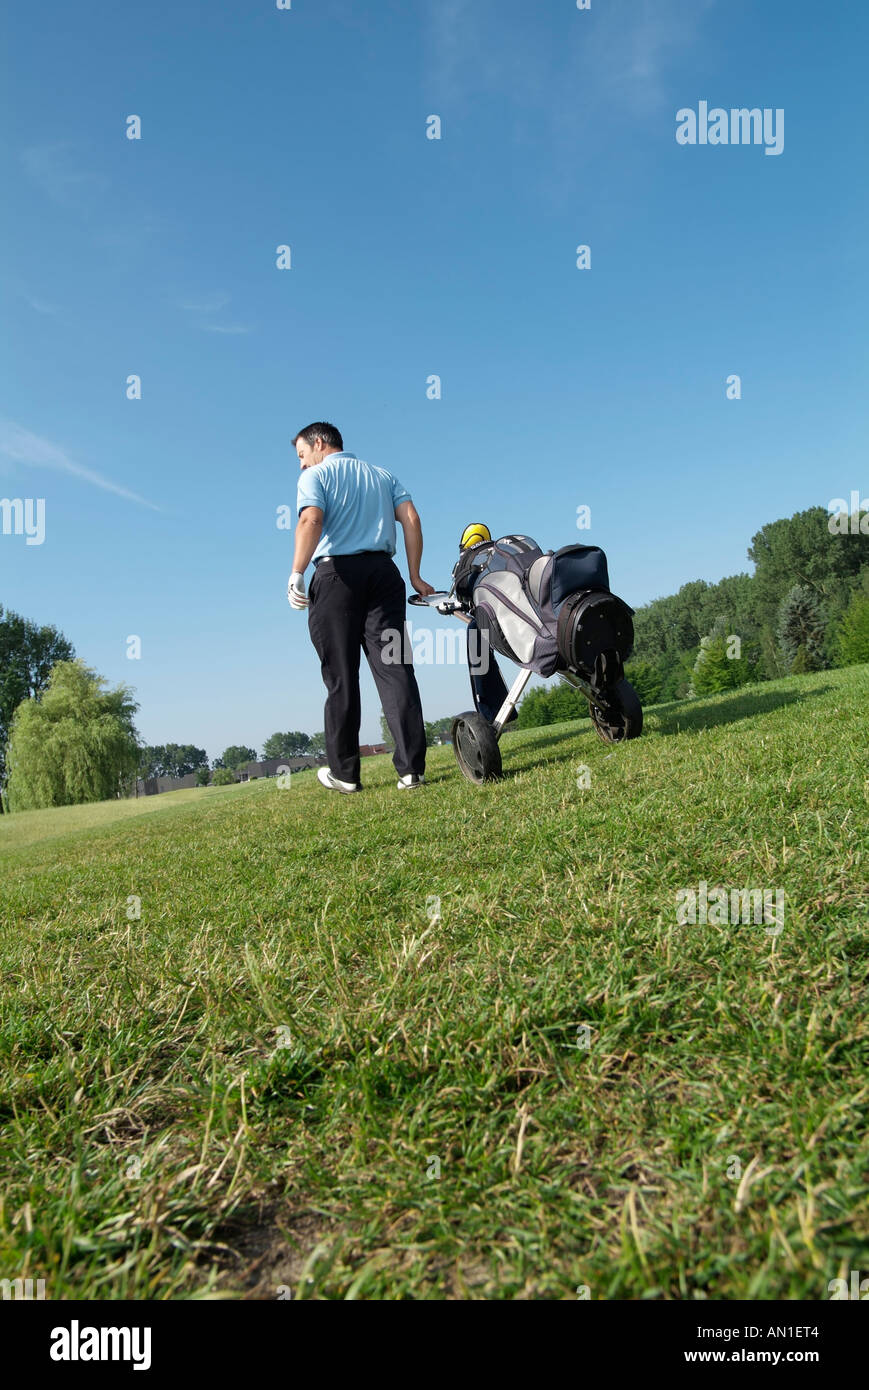 Golf Golfing Golfsport, detail of golfer on golf course Stock Photo